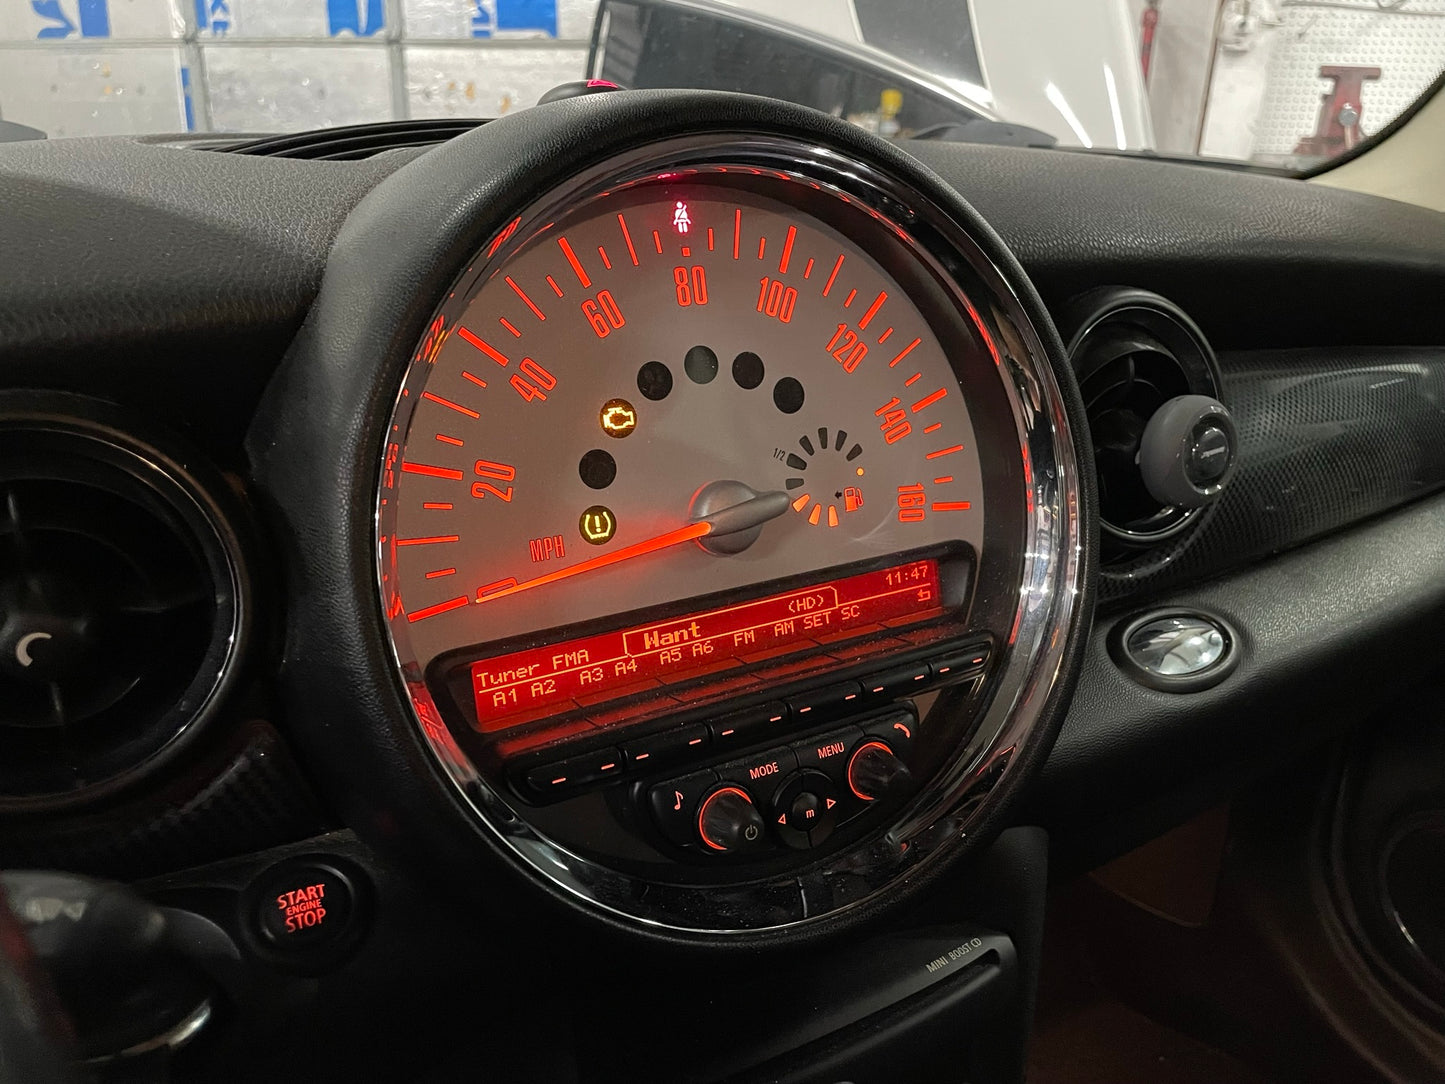 2012 MINI Cooper Clubman S, New Parts Car (June 2022) Stk #309